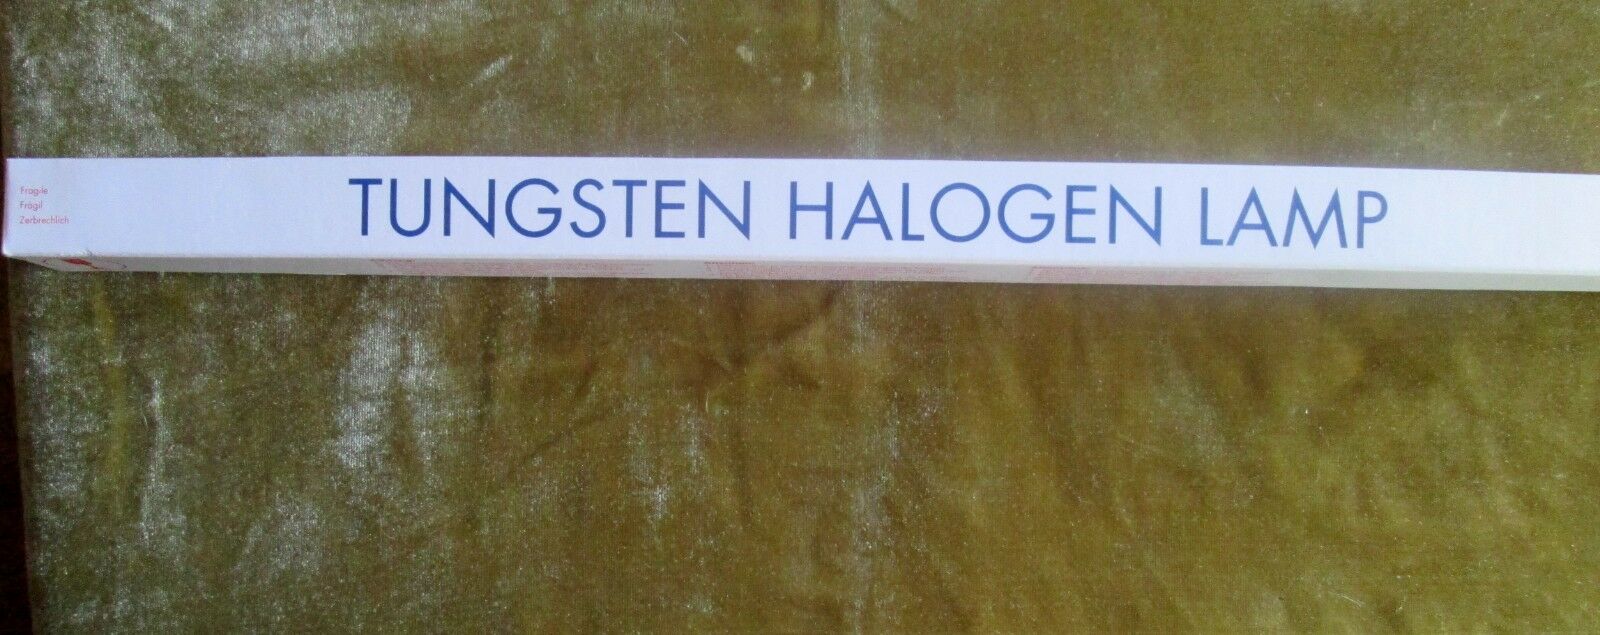 Tungsten Halogen Lamp / bulb AX530021